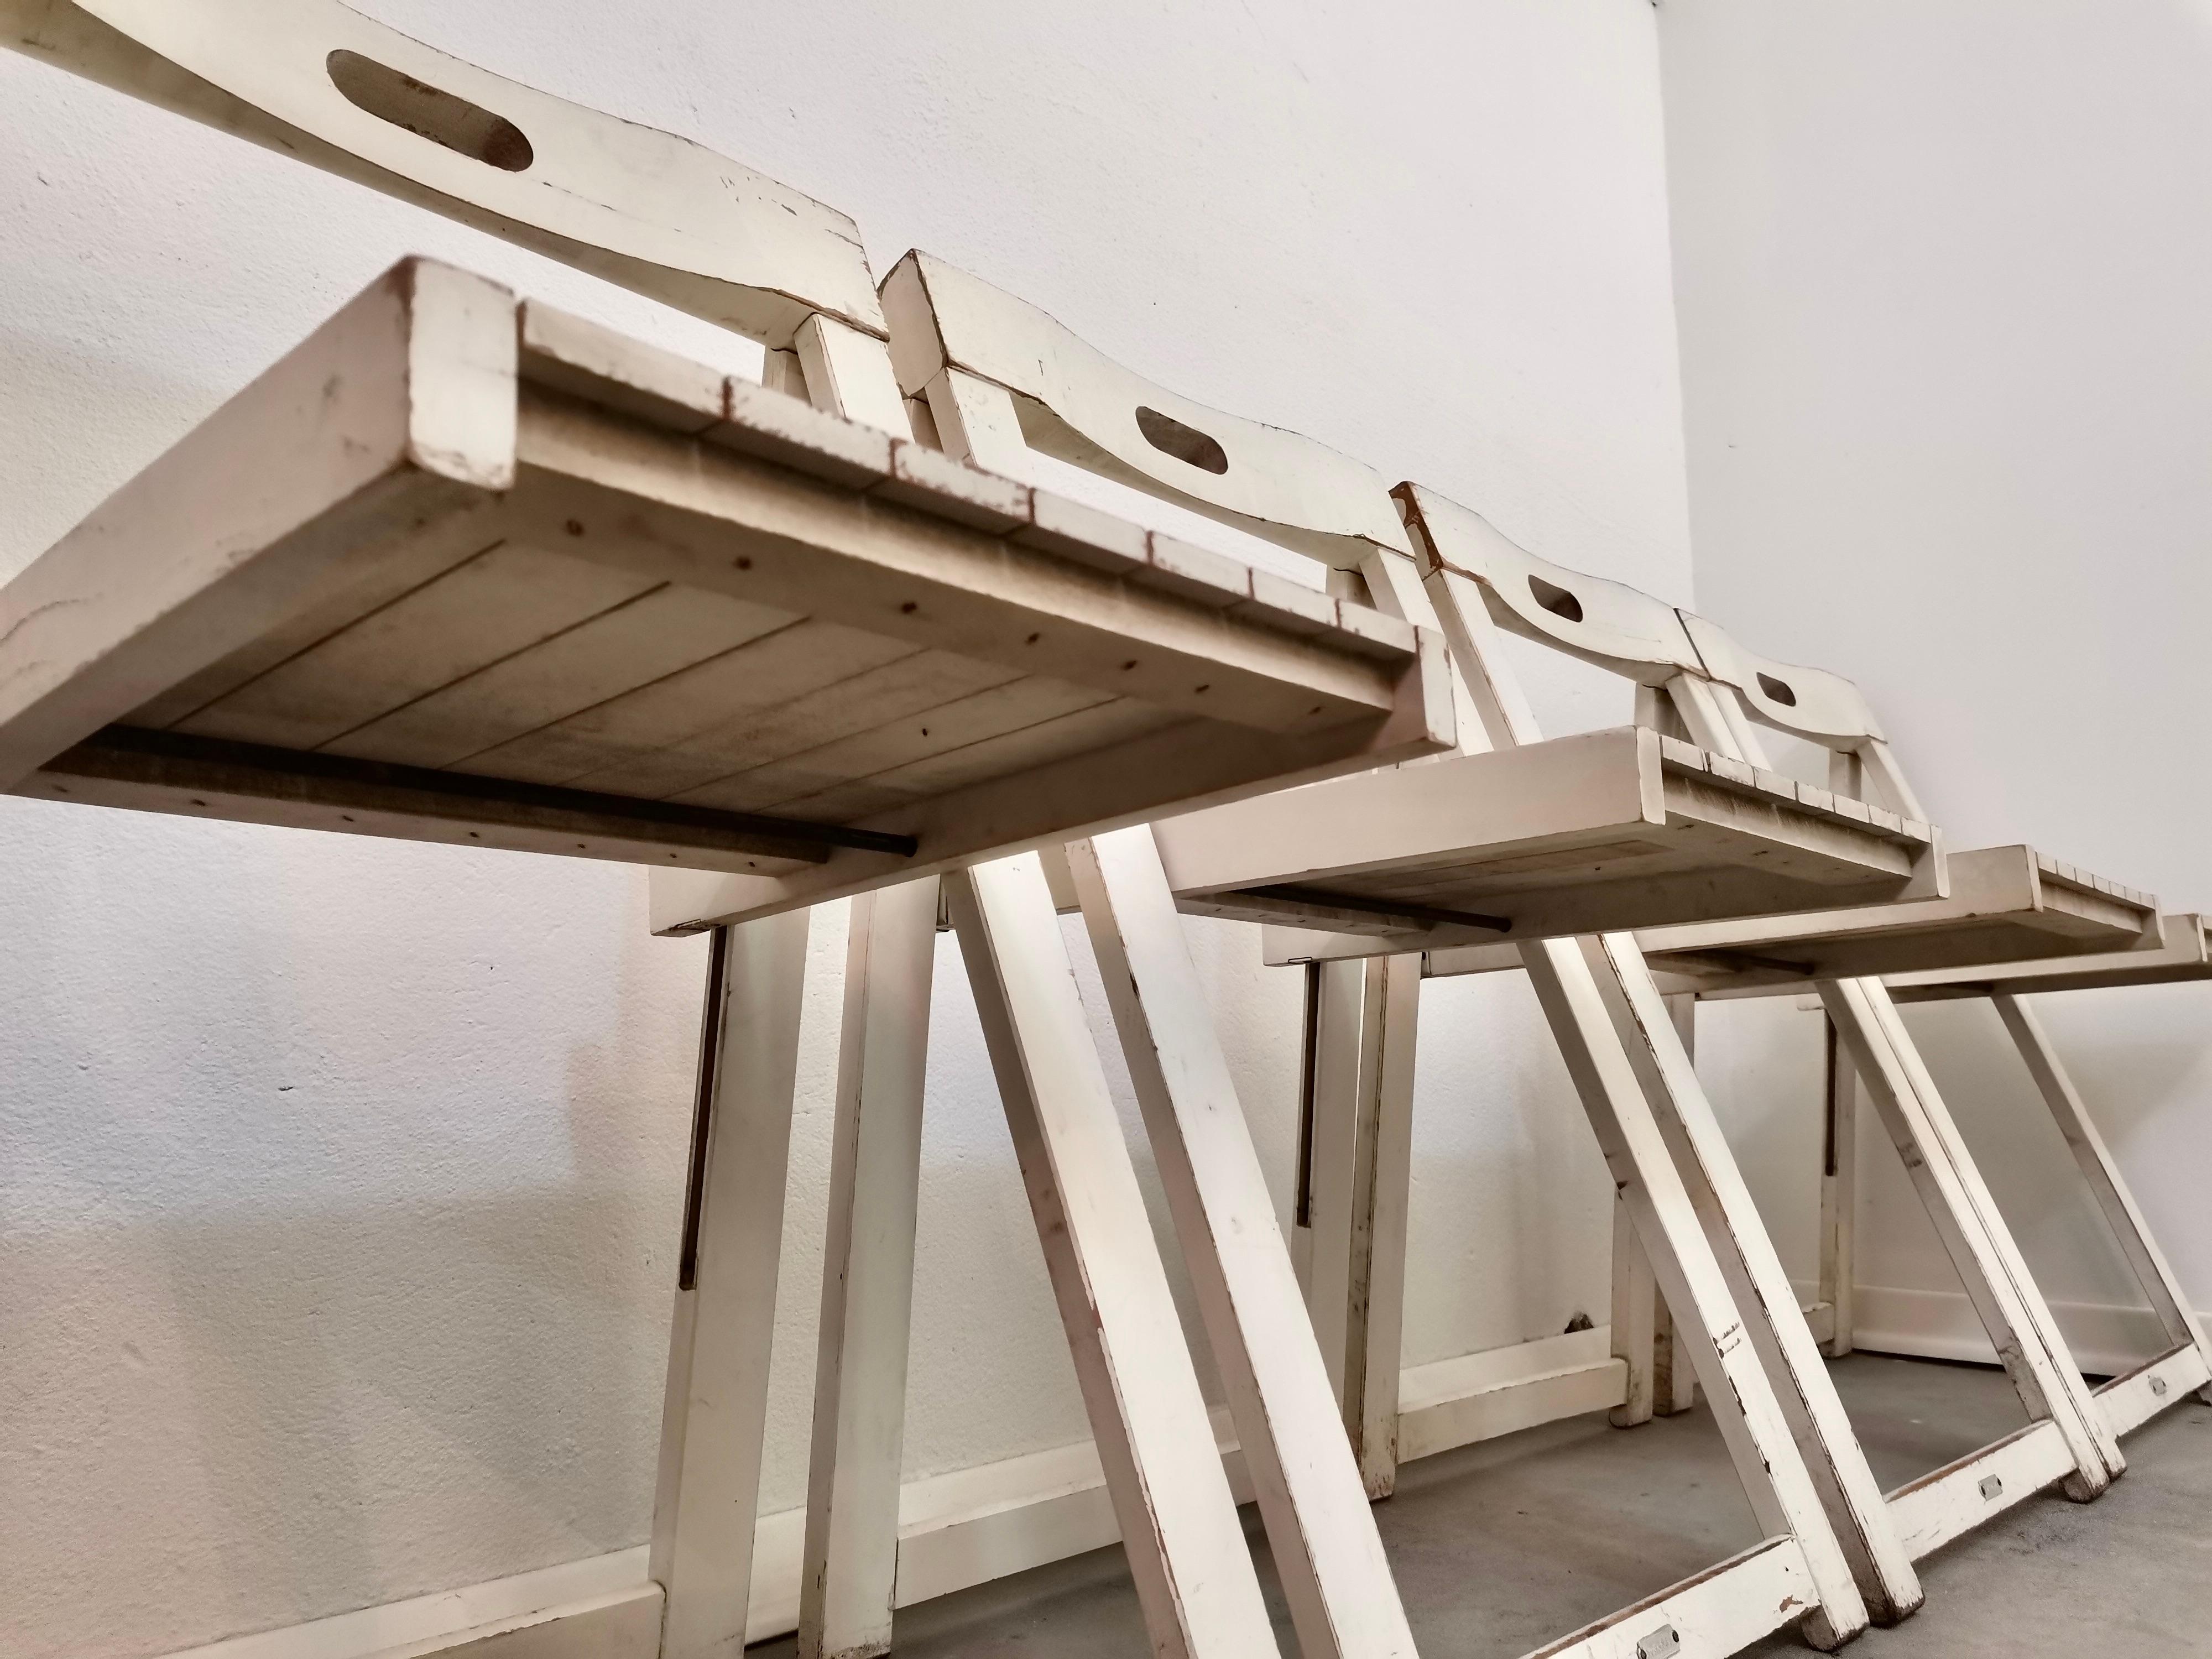 Slovenian Folding Chair by Aldo Jacober “Trieste” Model Style, 1970s